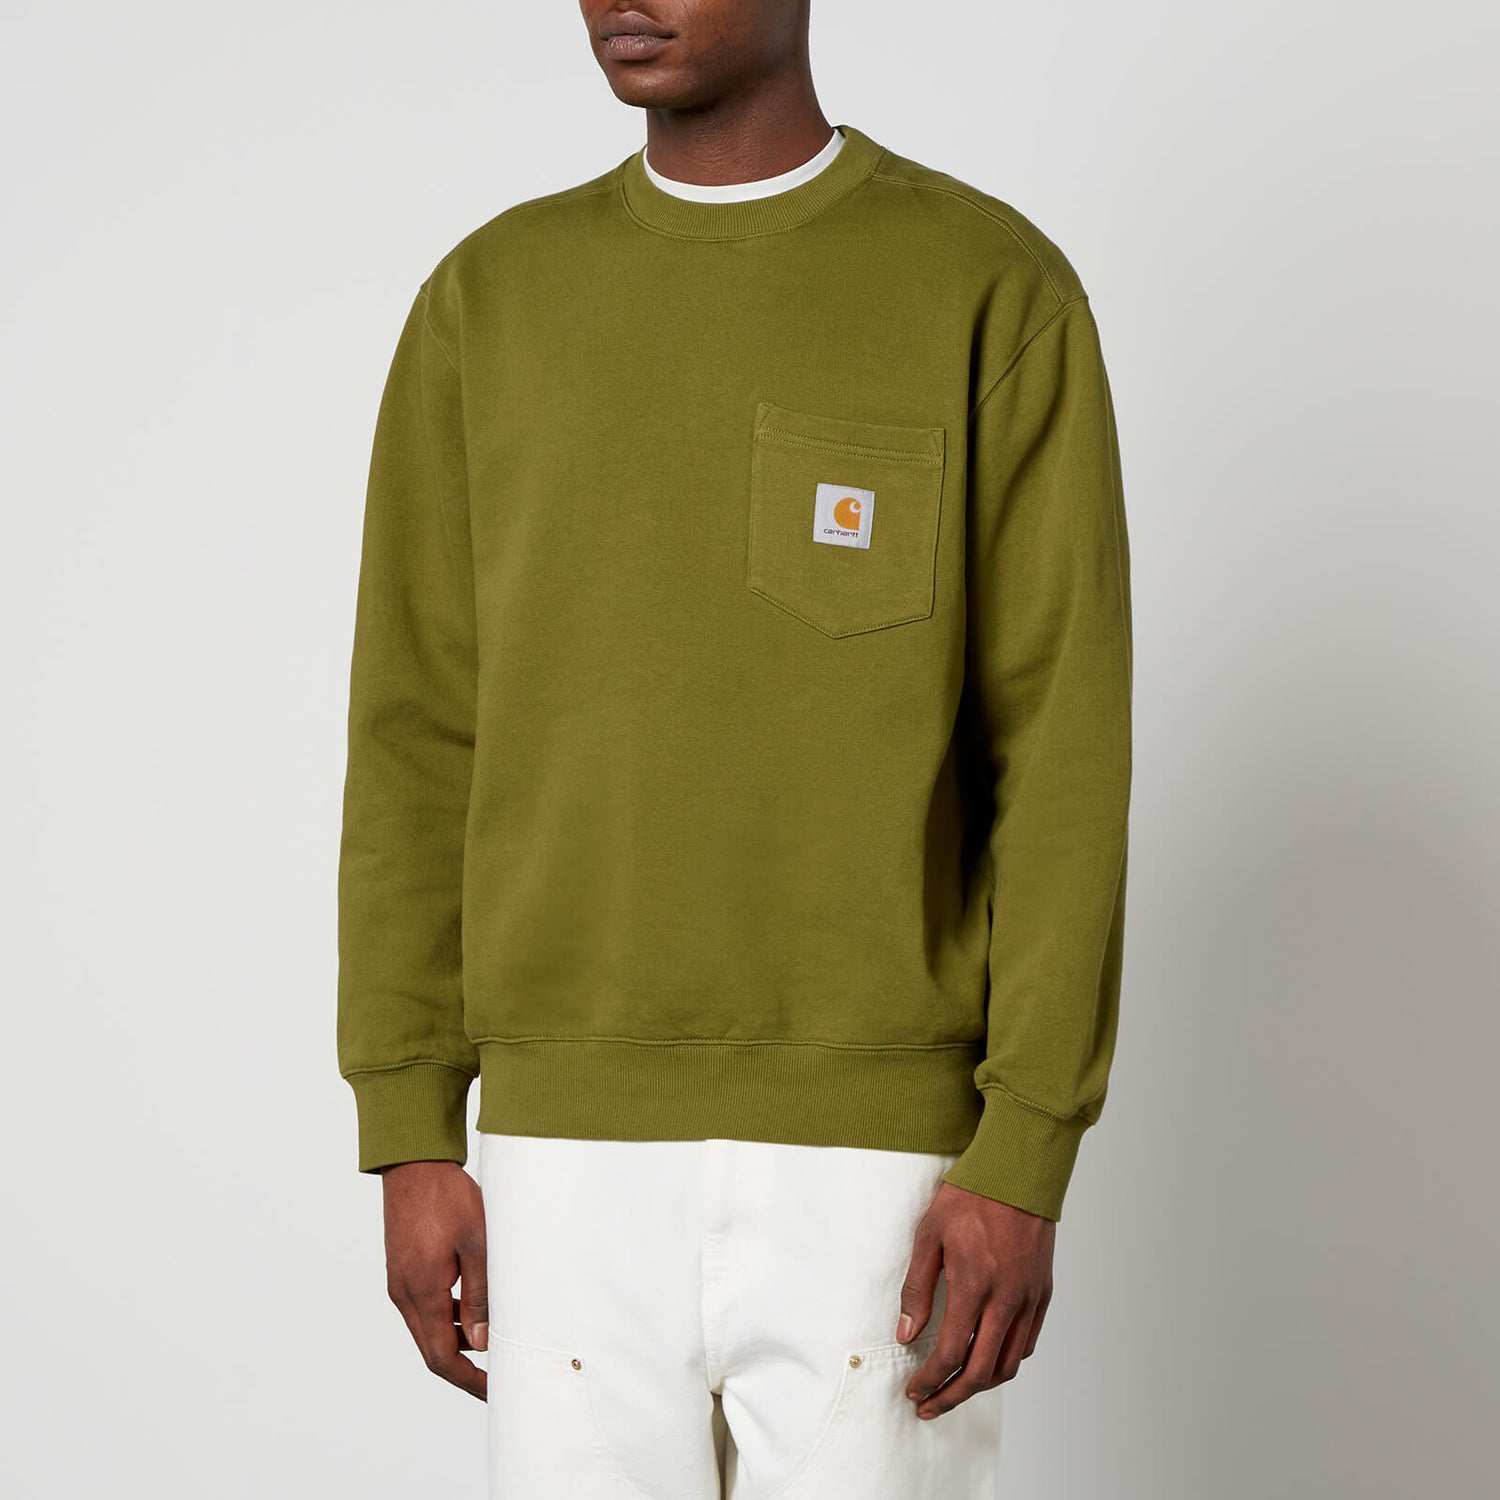 Carhartt Cotton Pocket Sweatshirt